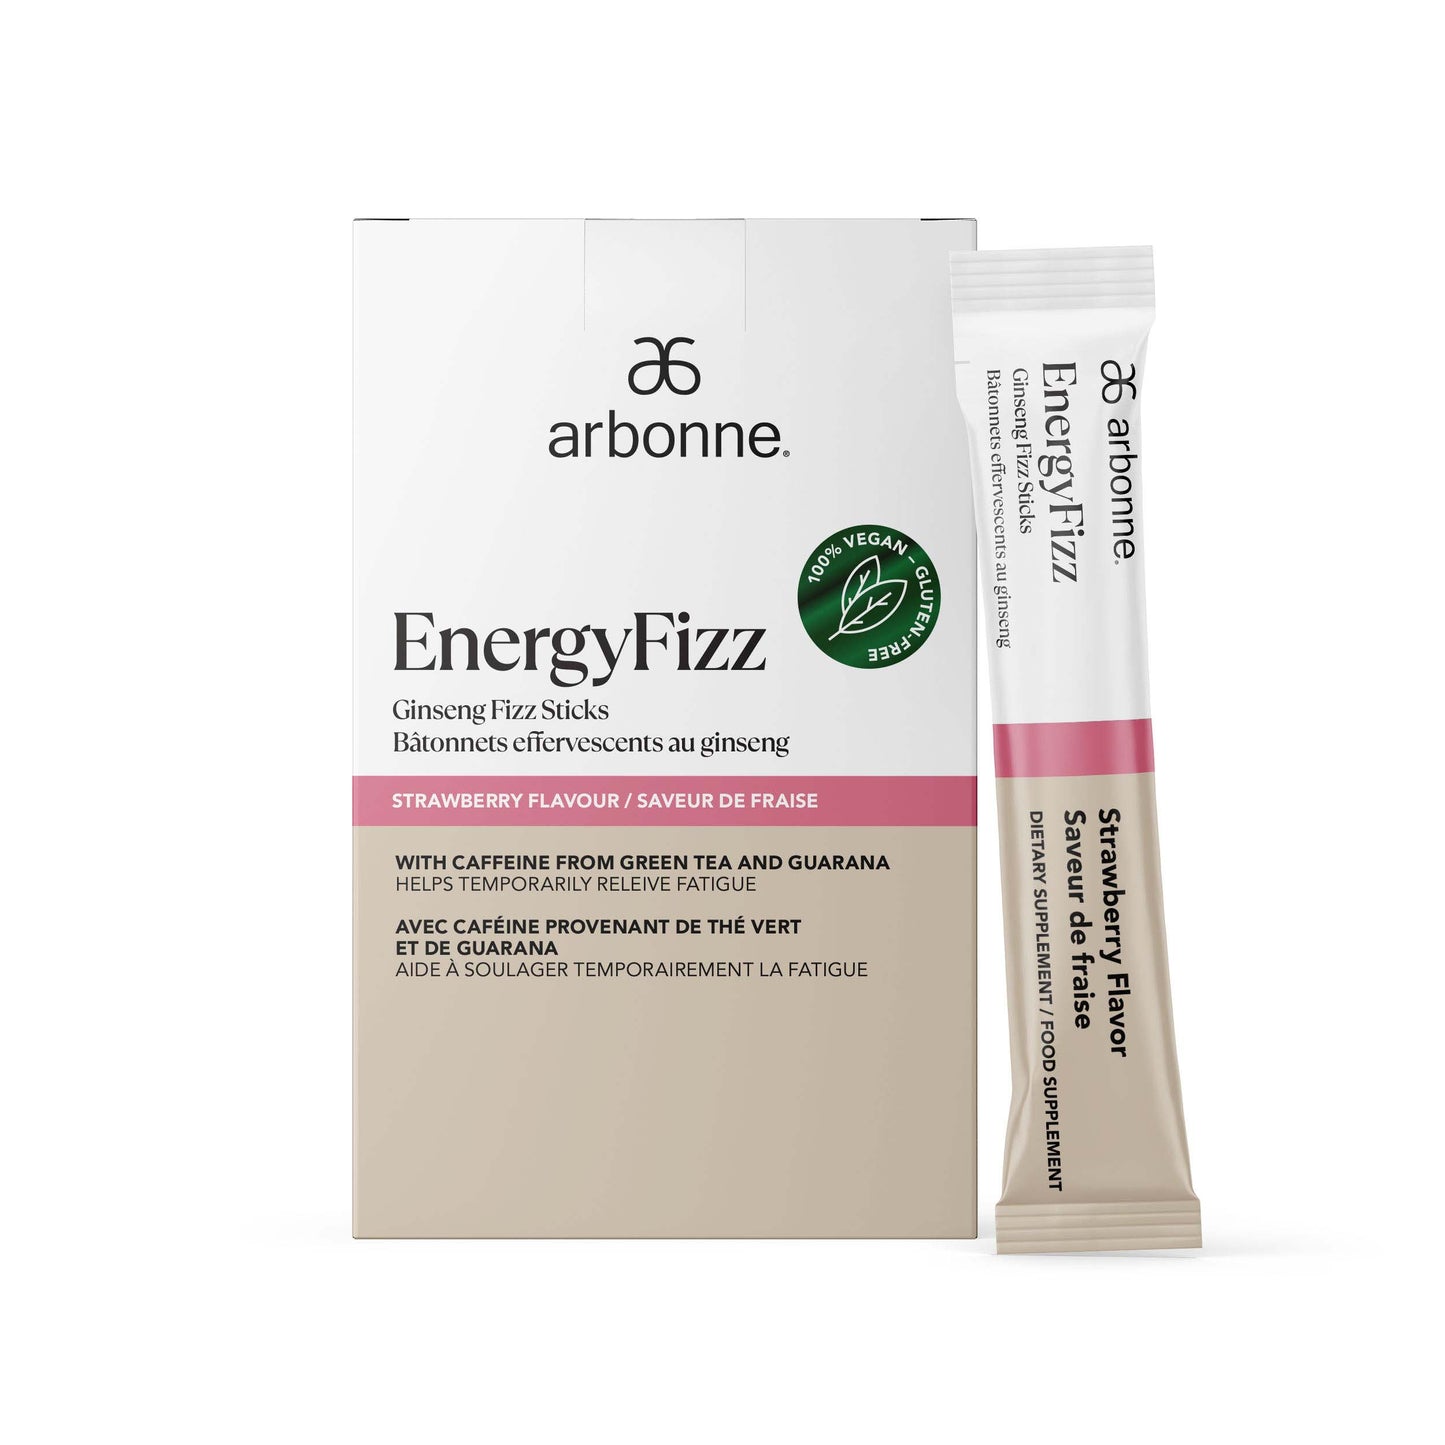 Arbonne EnergyFizz Ginseng Fizz Sticks in Strawberry Flavor, vegan-certified dietary supplement with green tea and guarana caffeine.